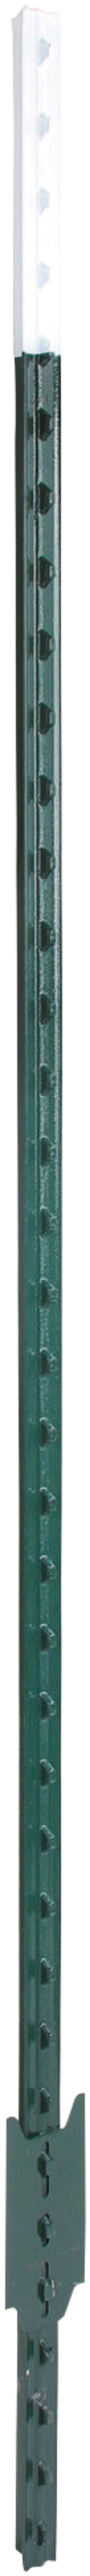 T-Pfahl grün lackiert, 240 cm